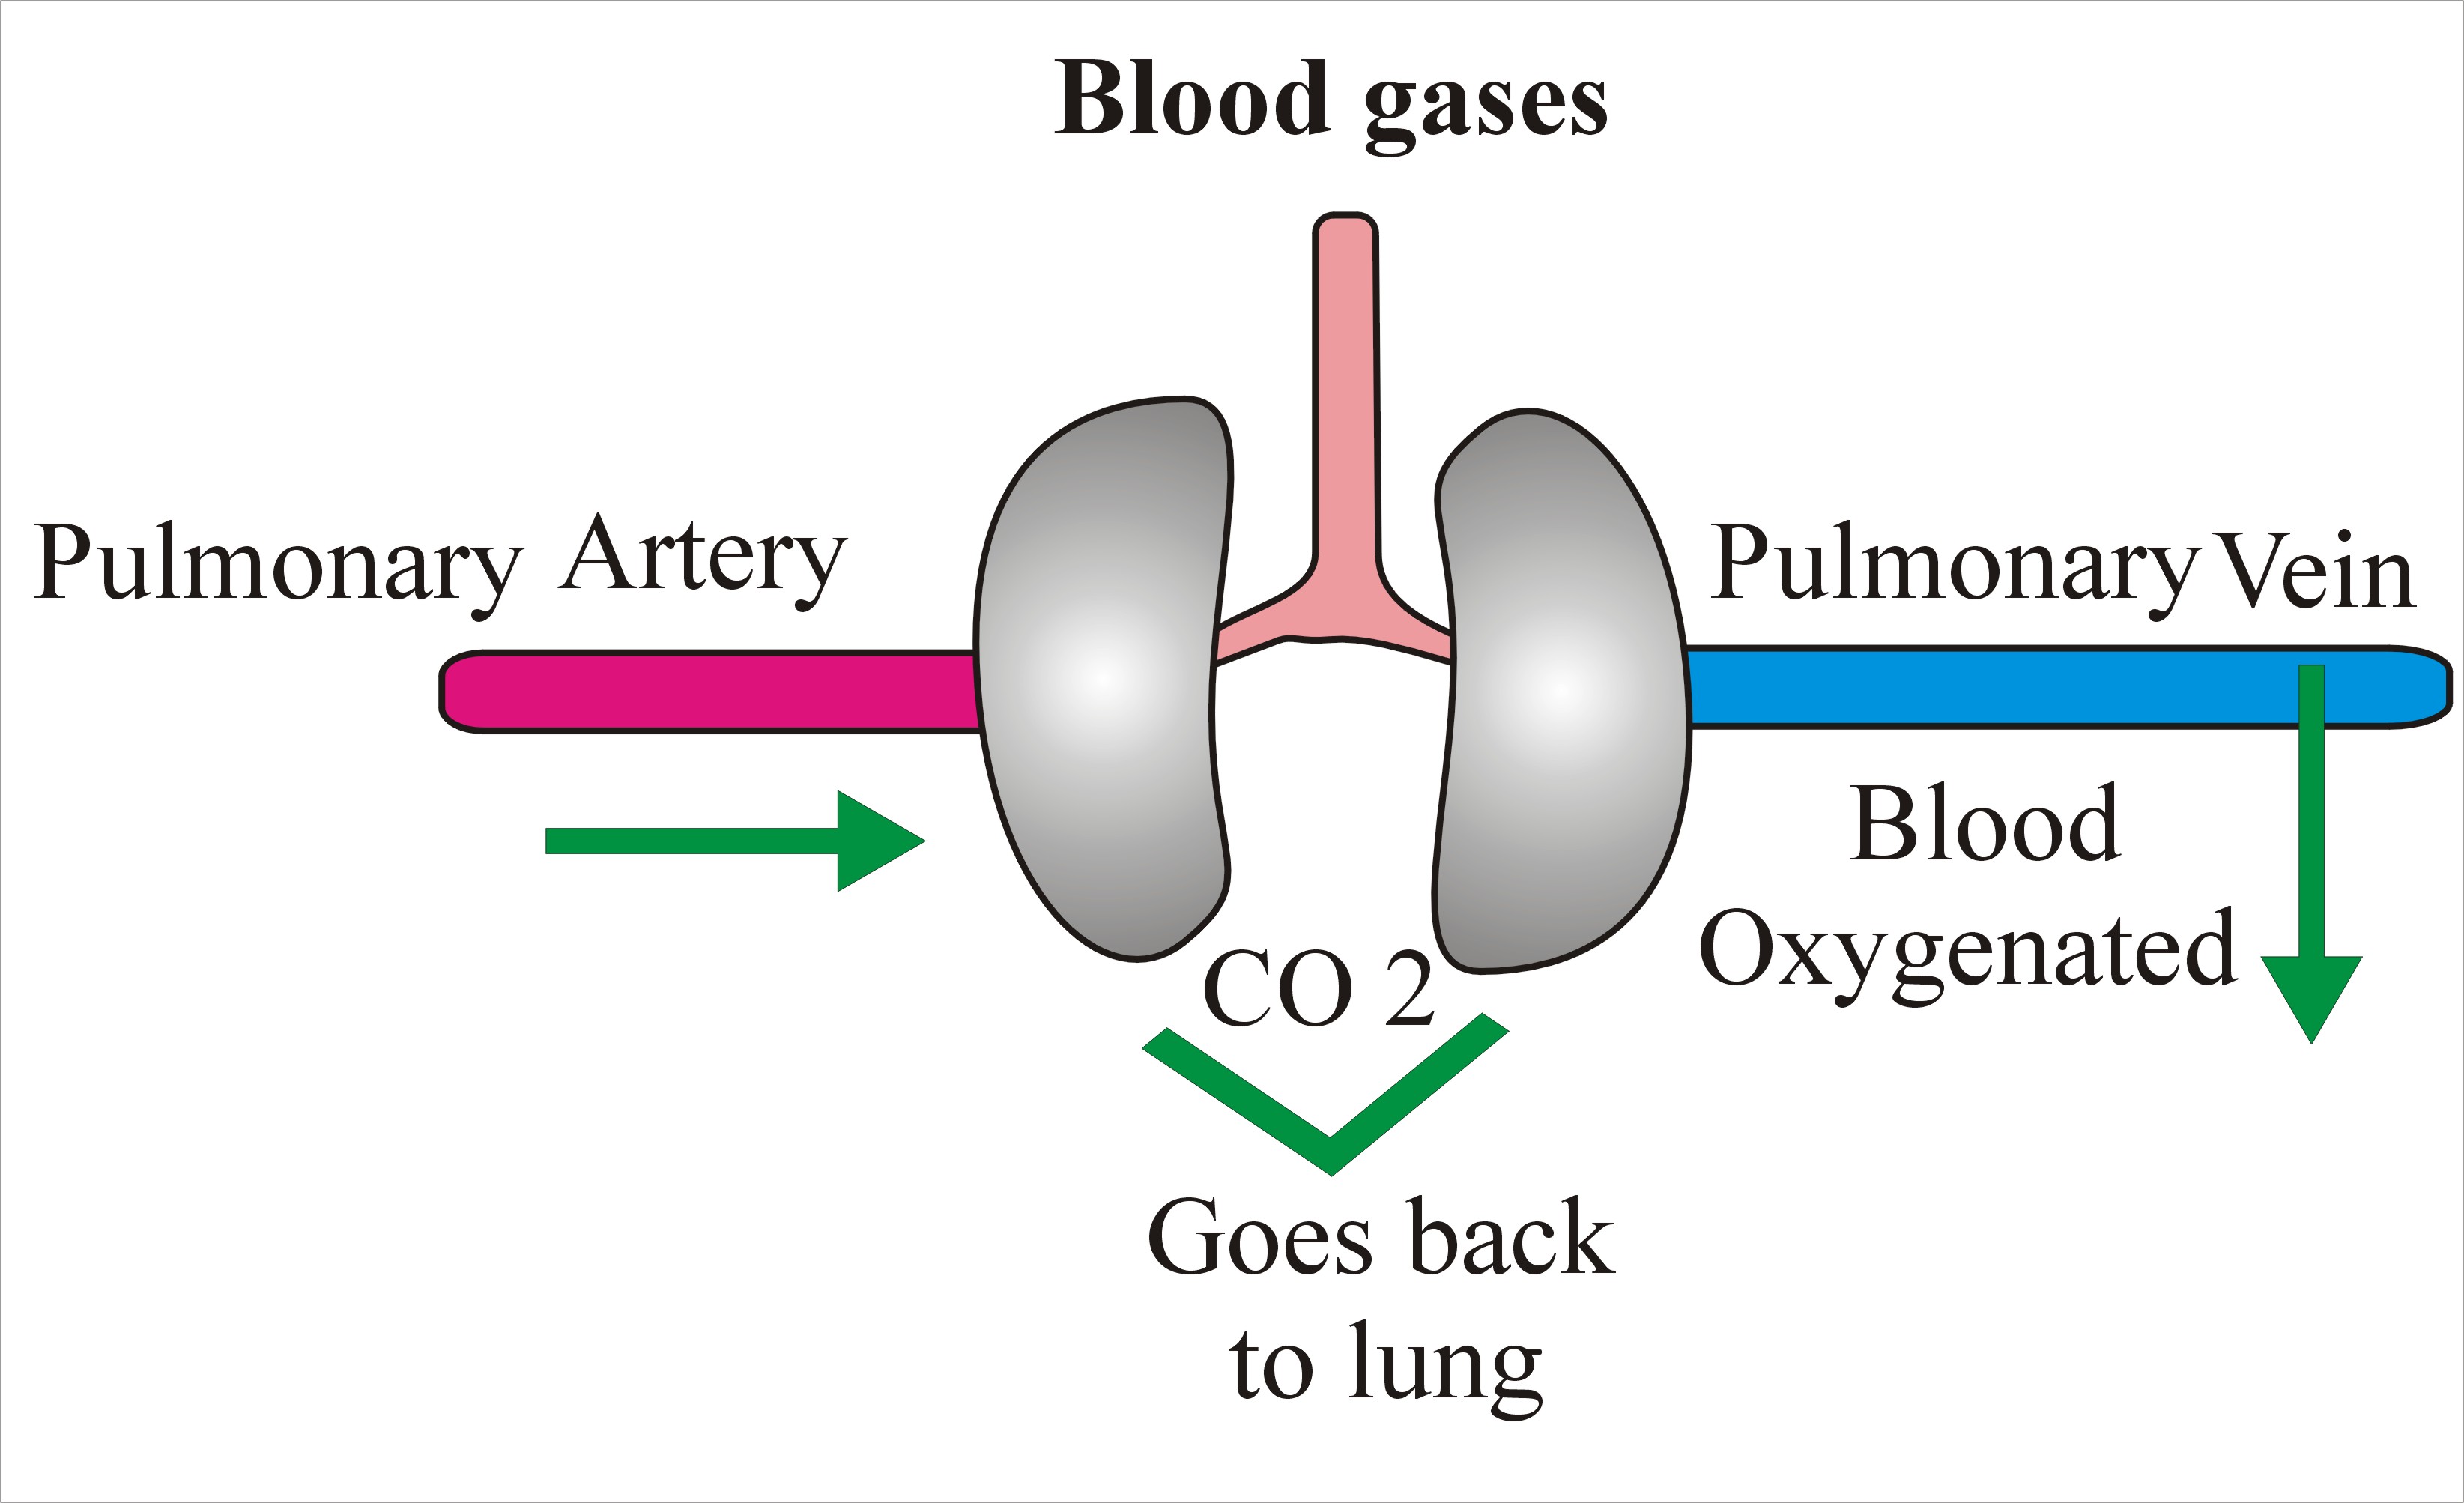 BLOOD GAS ANALYSIS, VENOUS LabTest